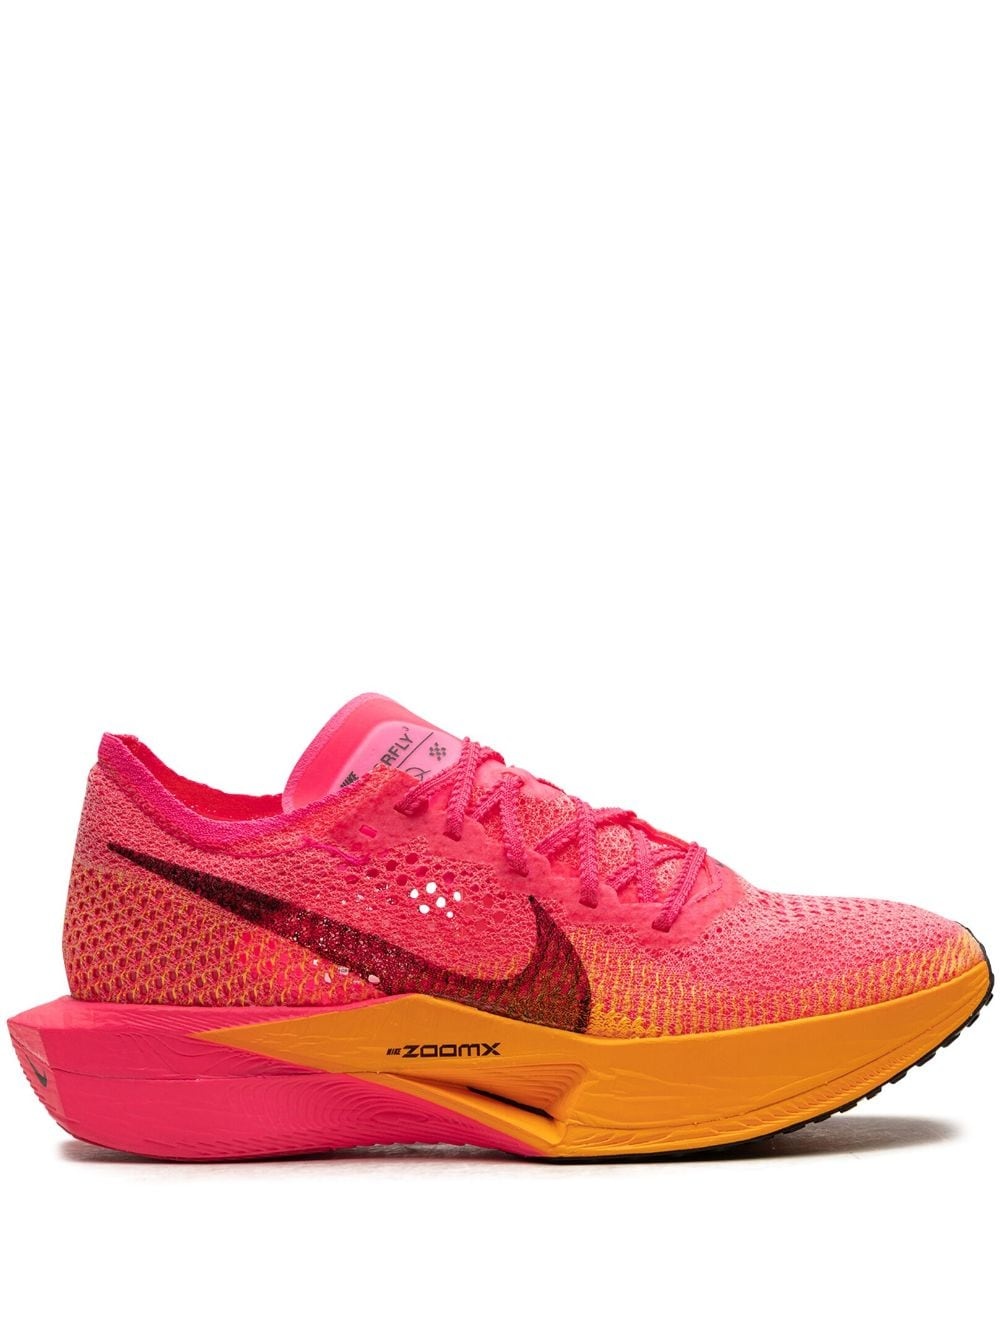 ZoomX Vaporfly Next% 3 "Hyper Pink/Laser Orange" sneakers - 1